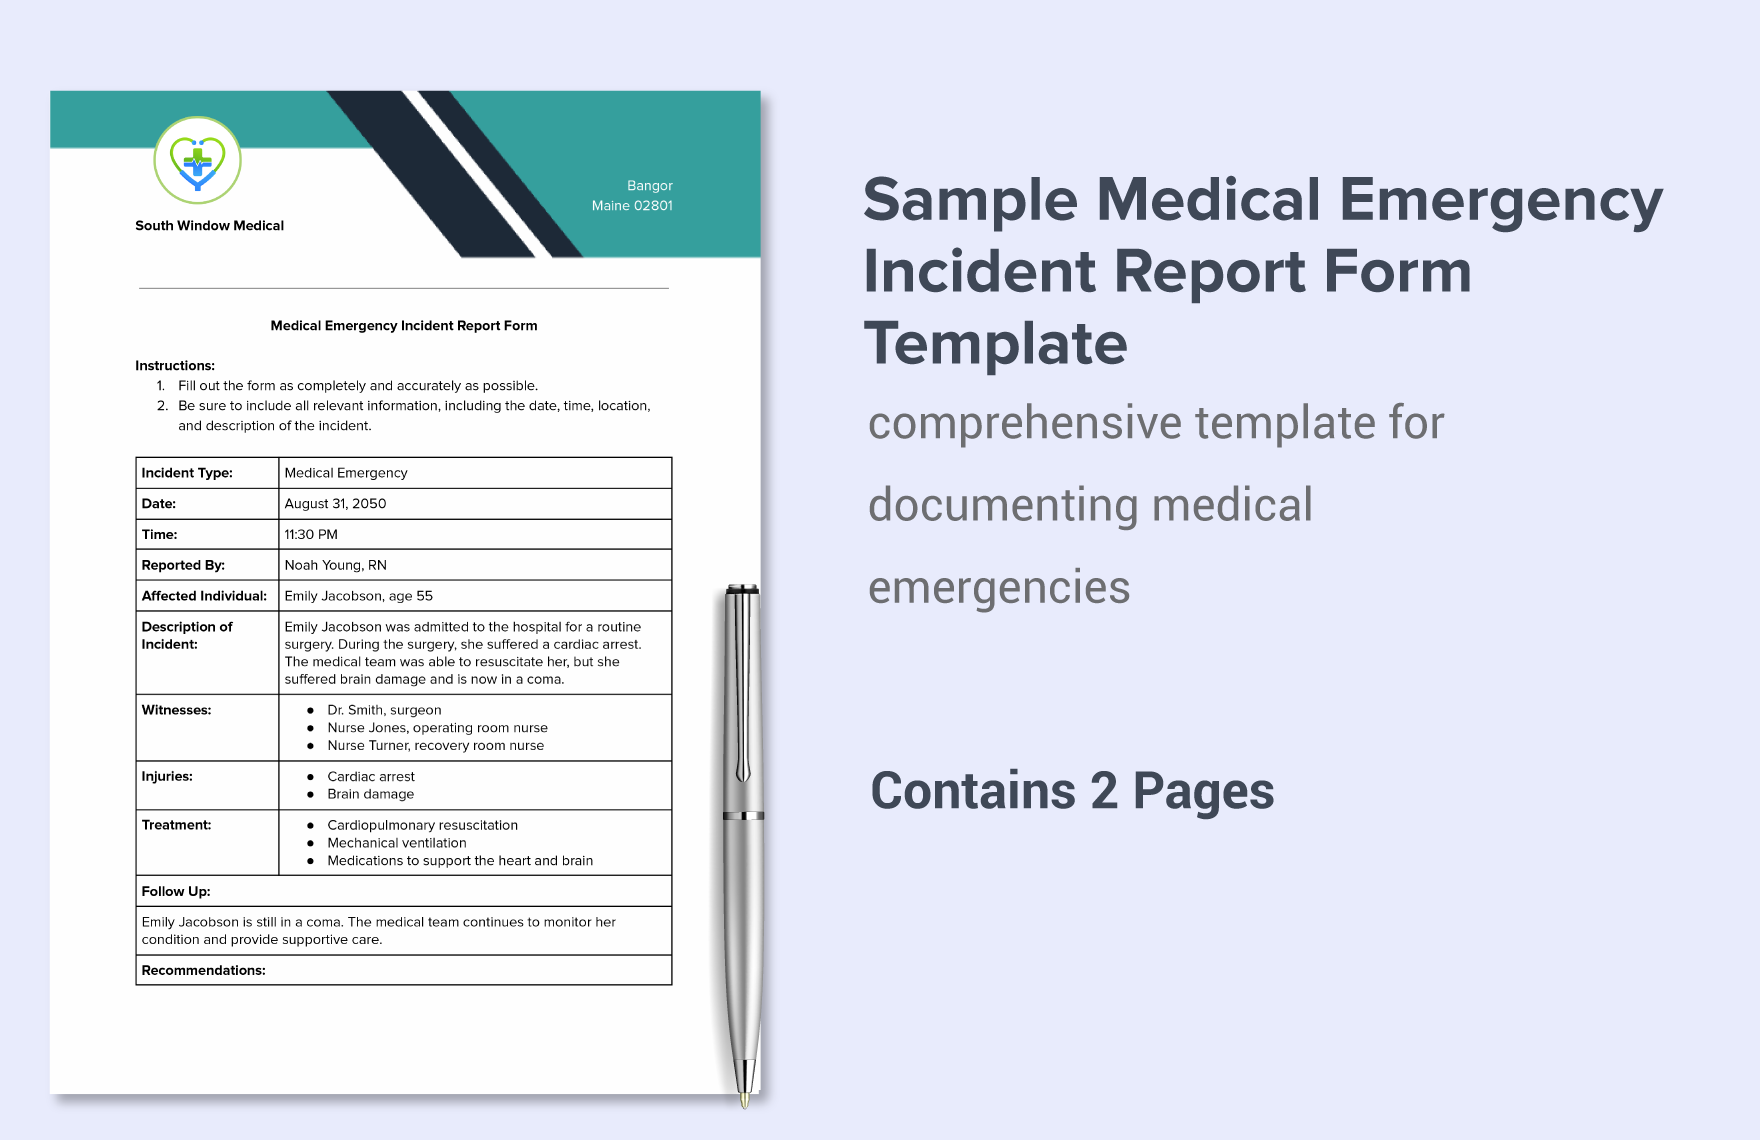 Sample Medical Emergency Incident Report Form Template